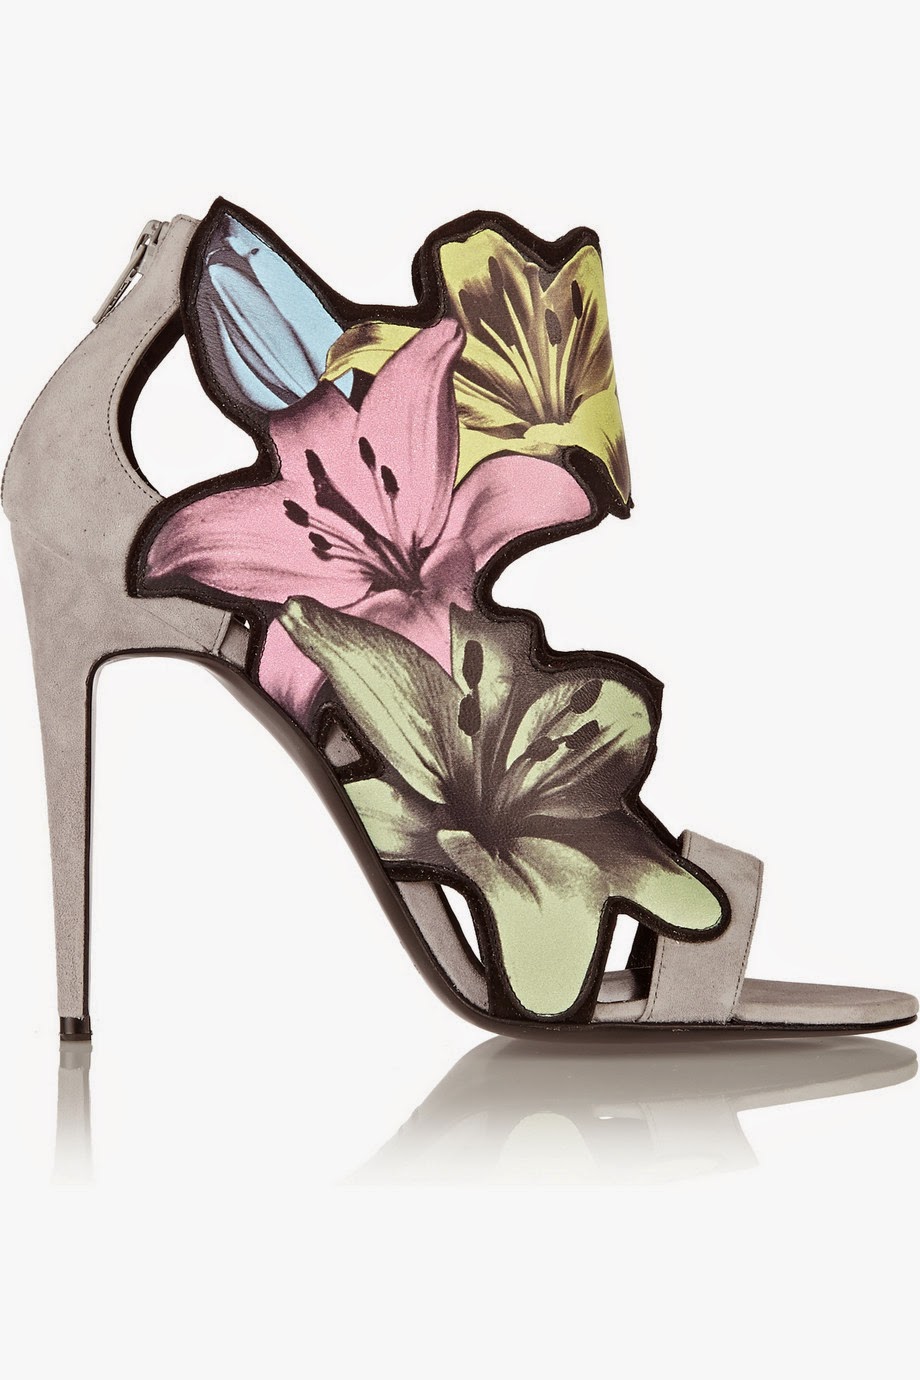 PIERRE HARDY Grey suede flower appliqué sandals